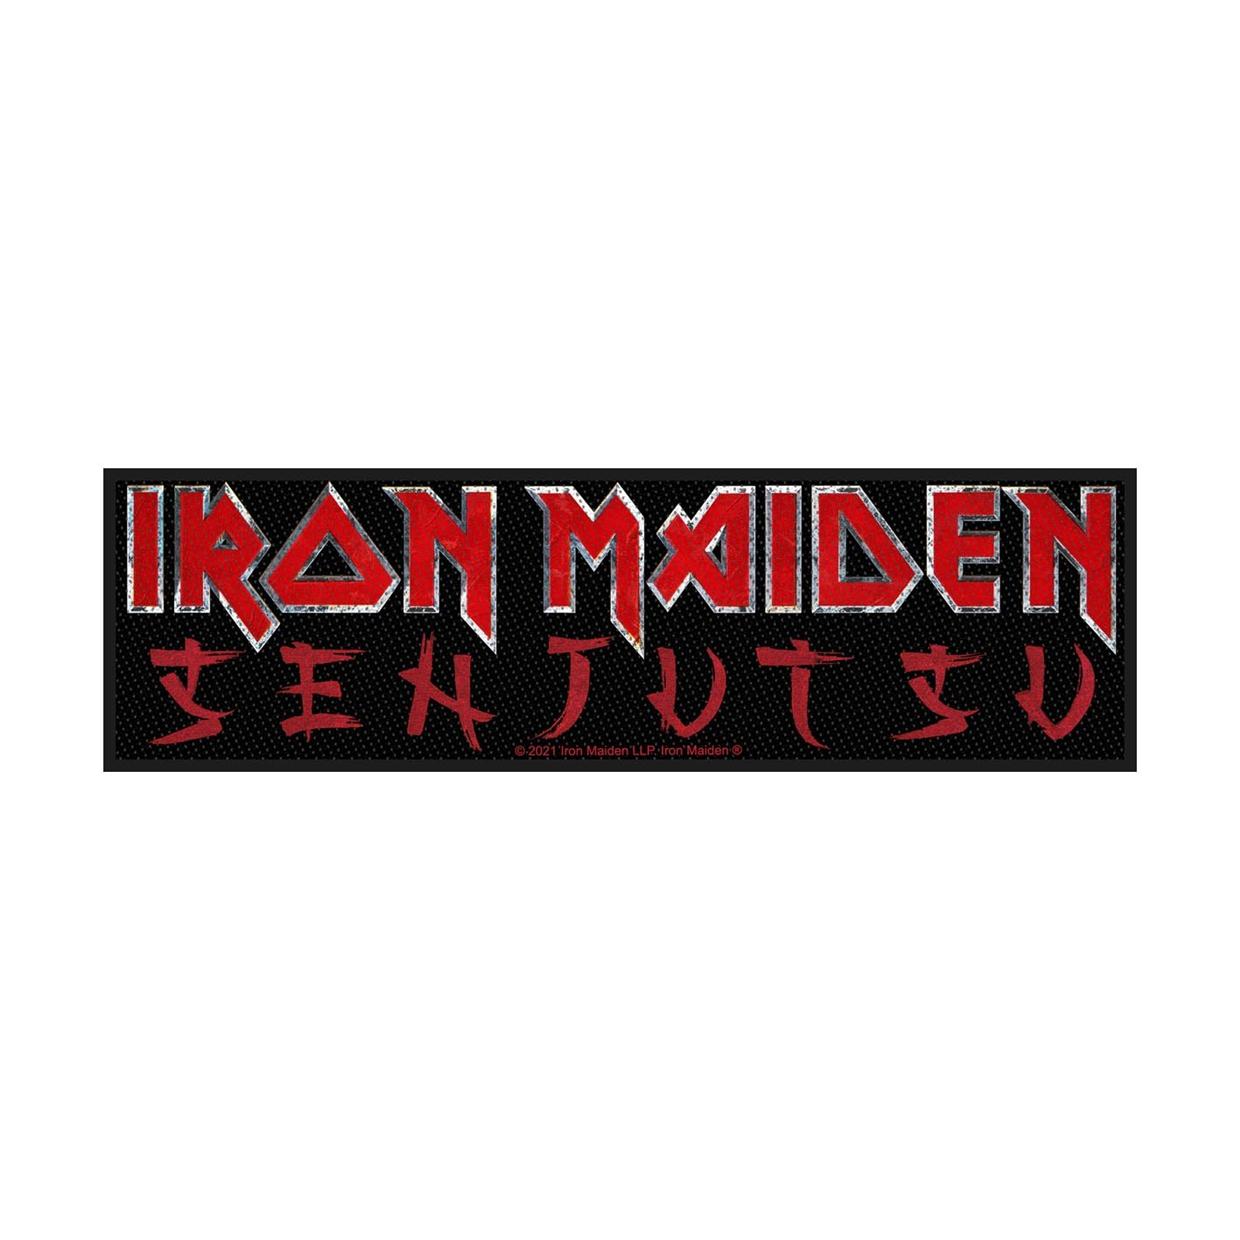 (ACAECf) Iron Maiden ItBVi Senjutsu by Xgbv S pb` yCOʔ́z